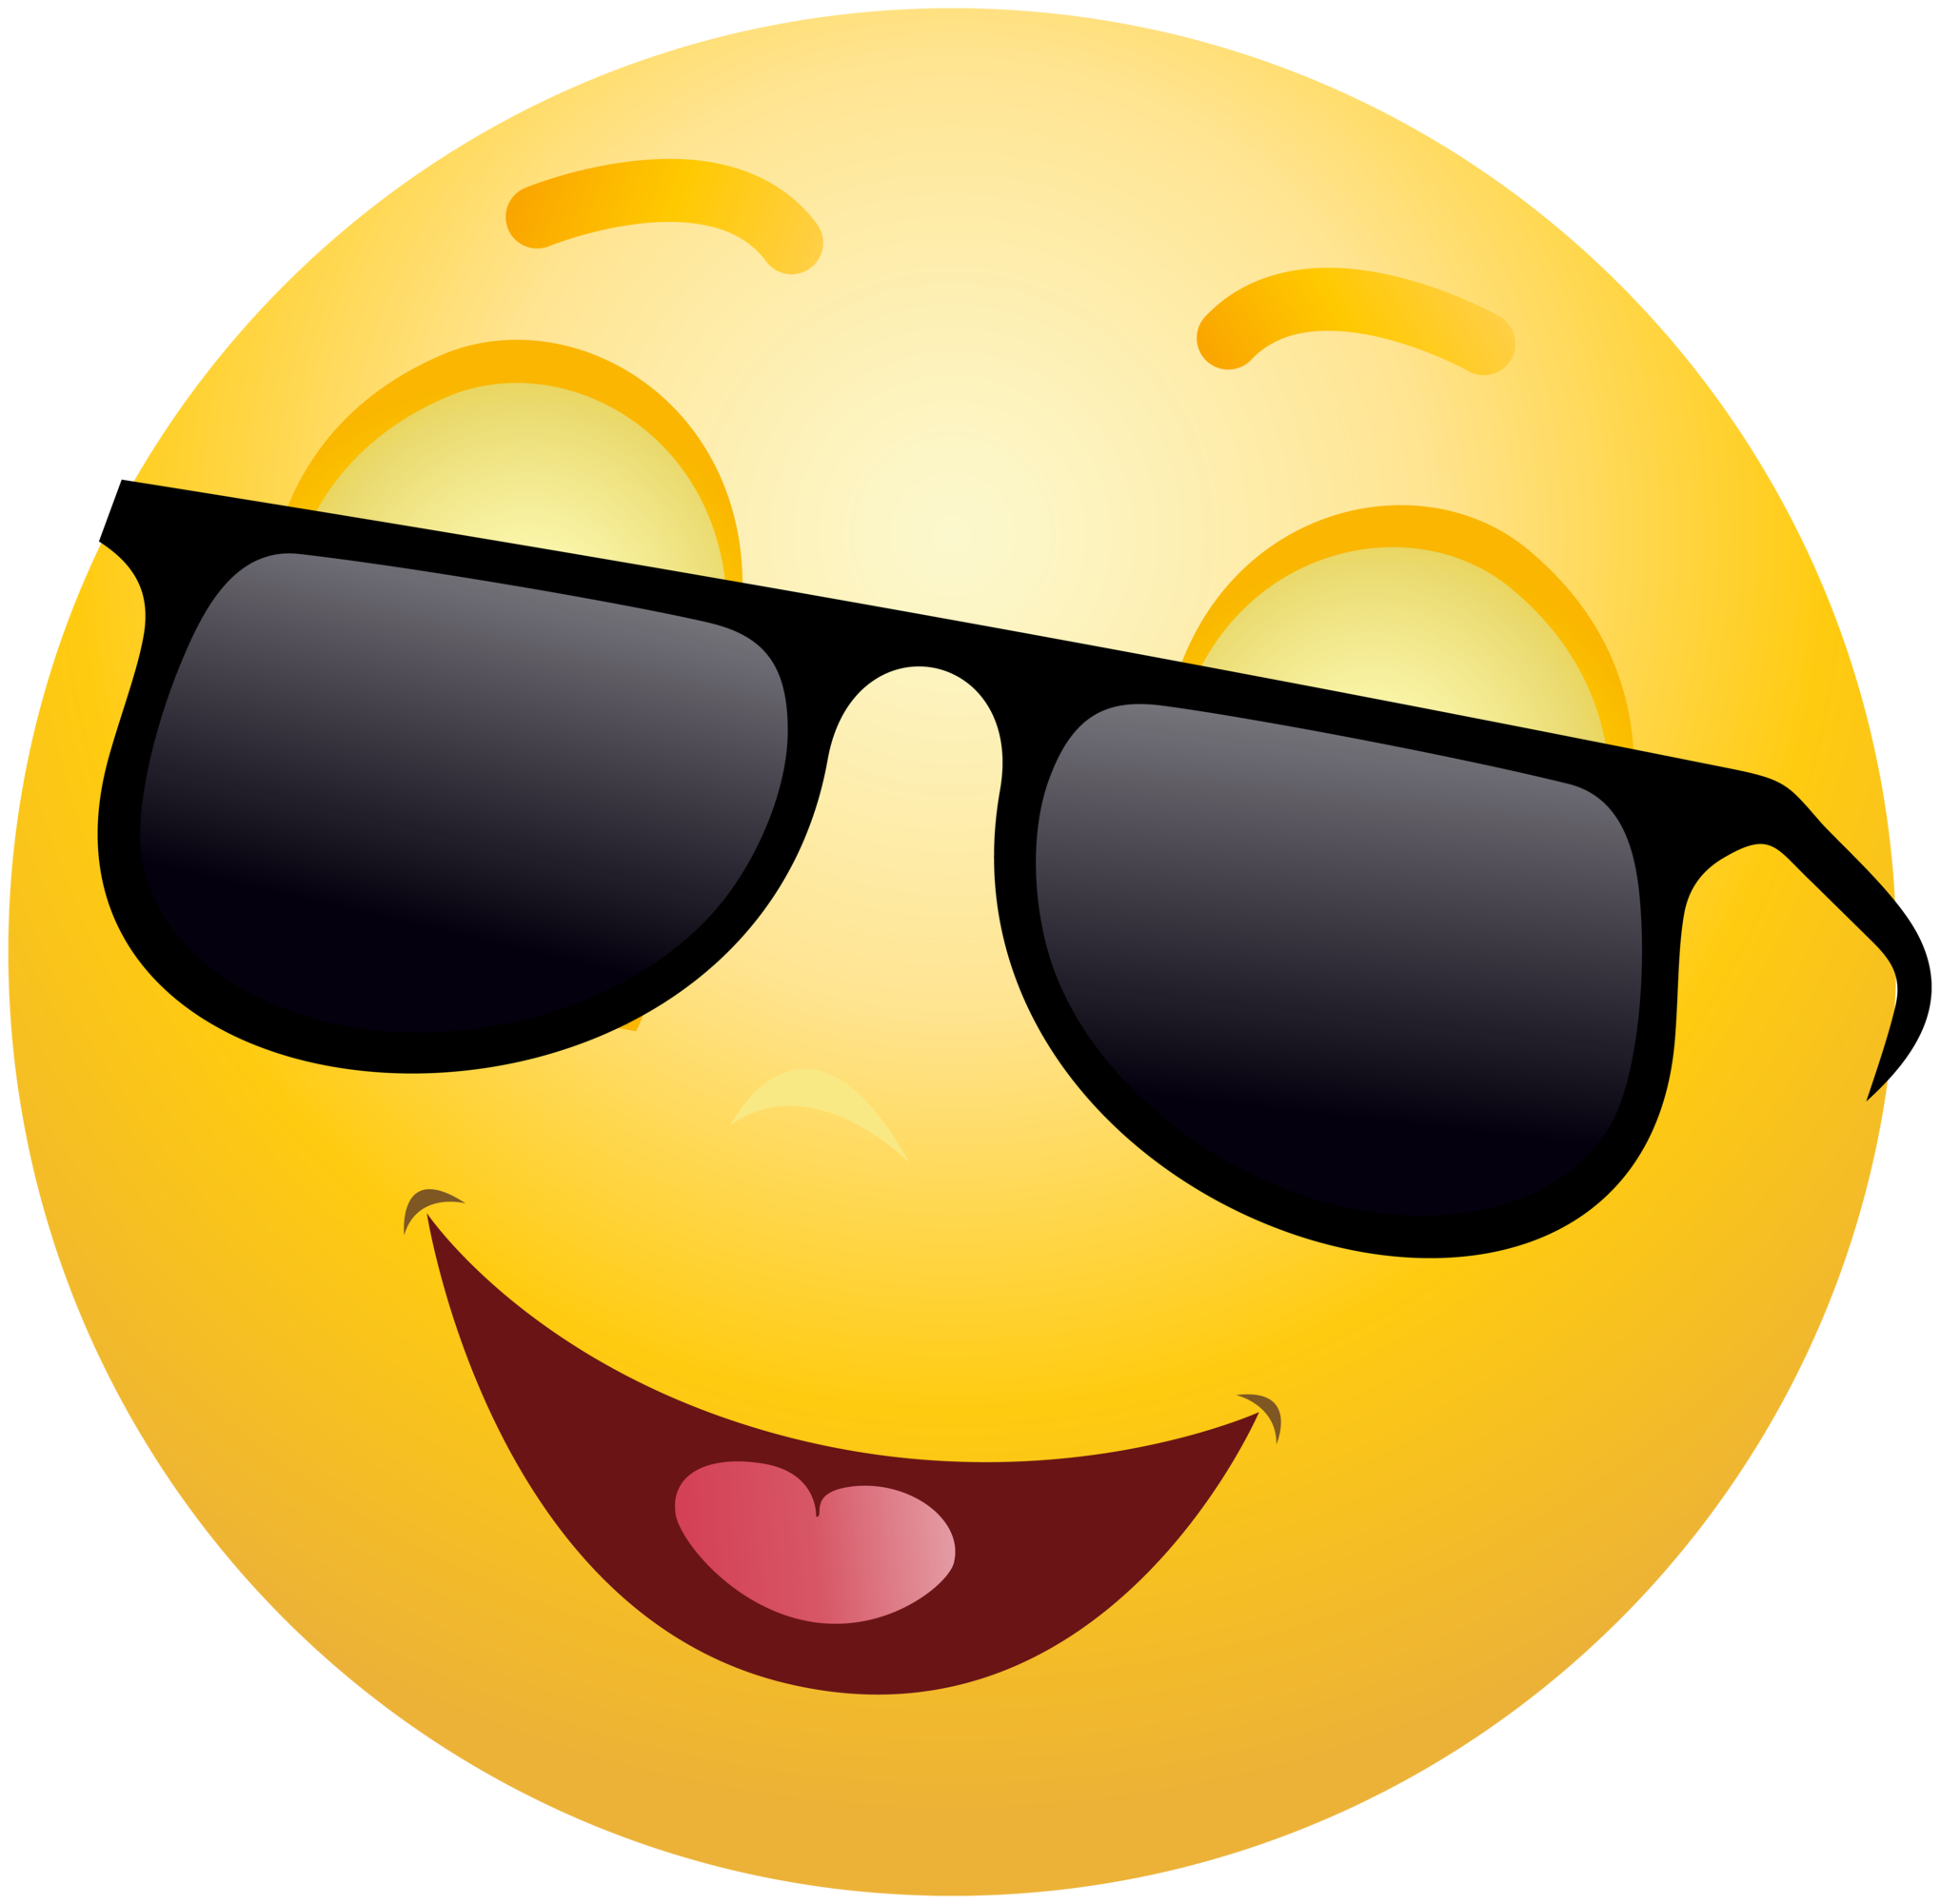 Emoticon Smiley Sunglasses Faces Emoji Free Photo PNG Clipart